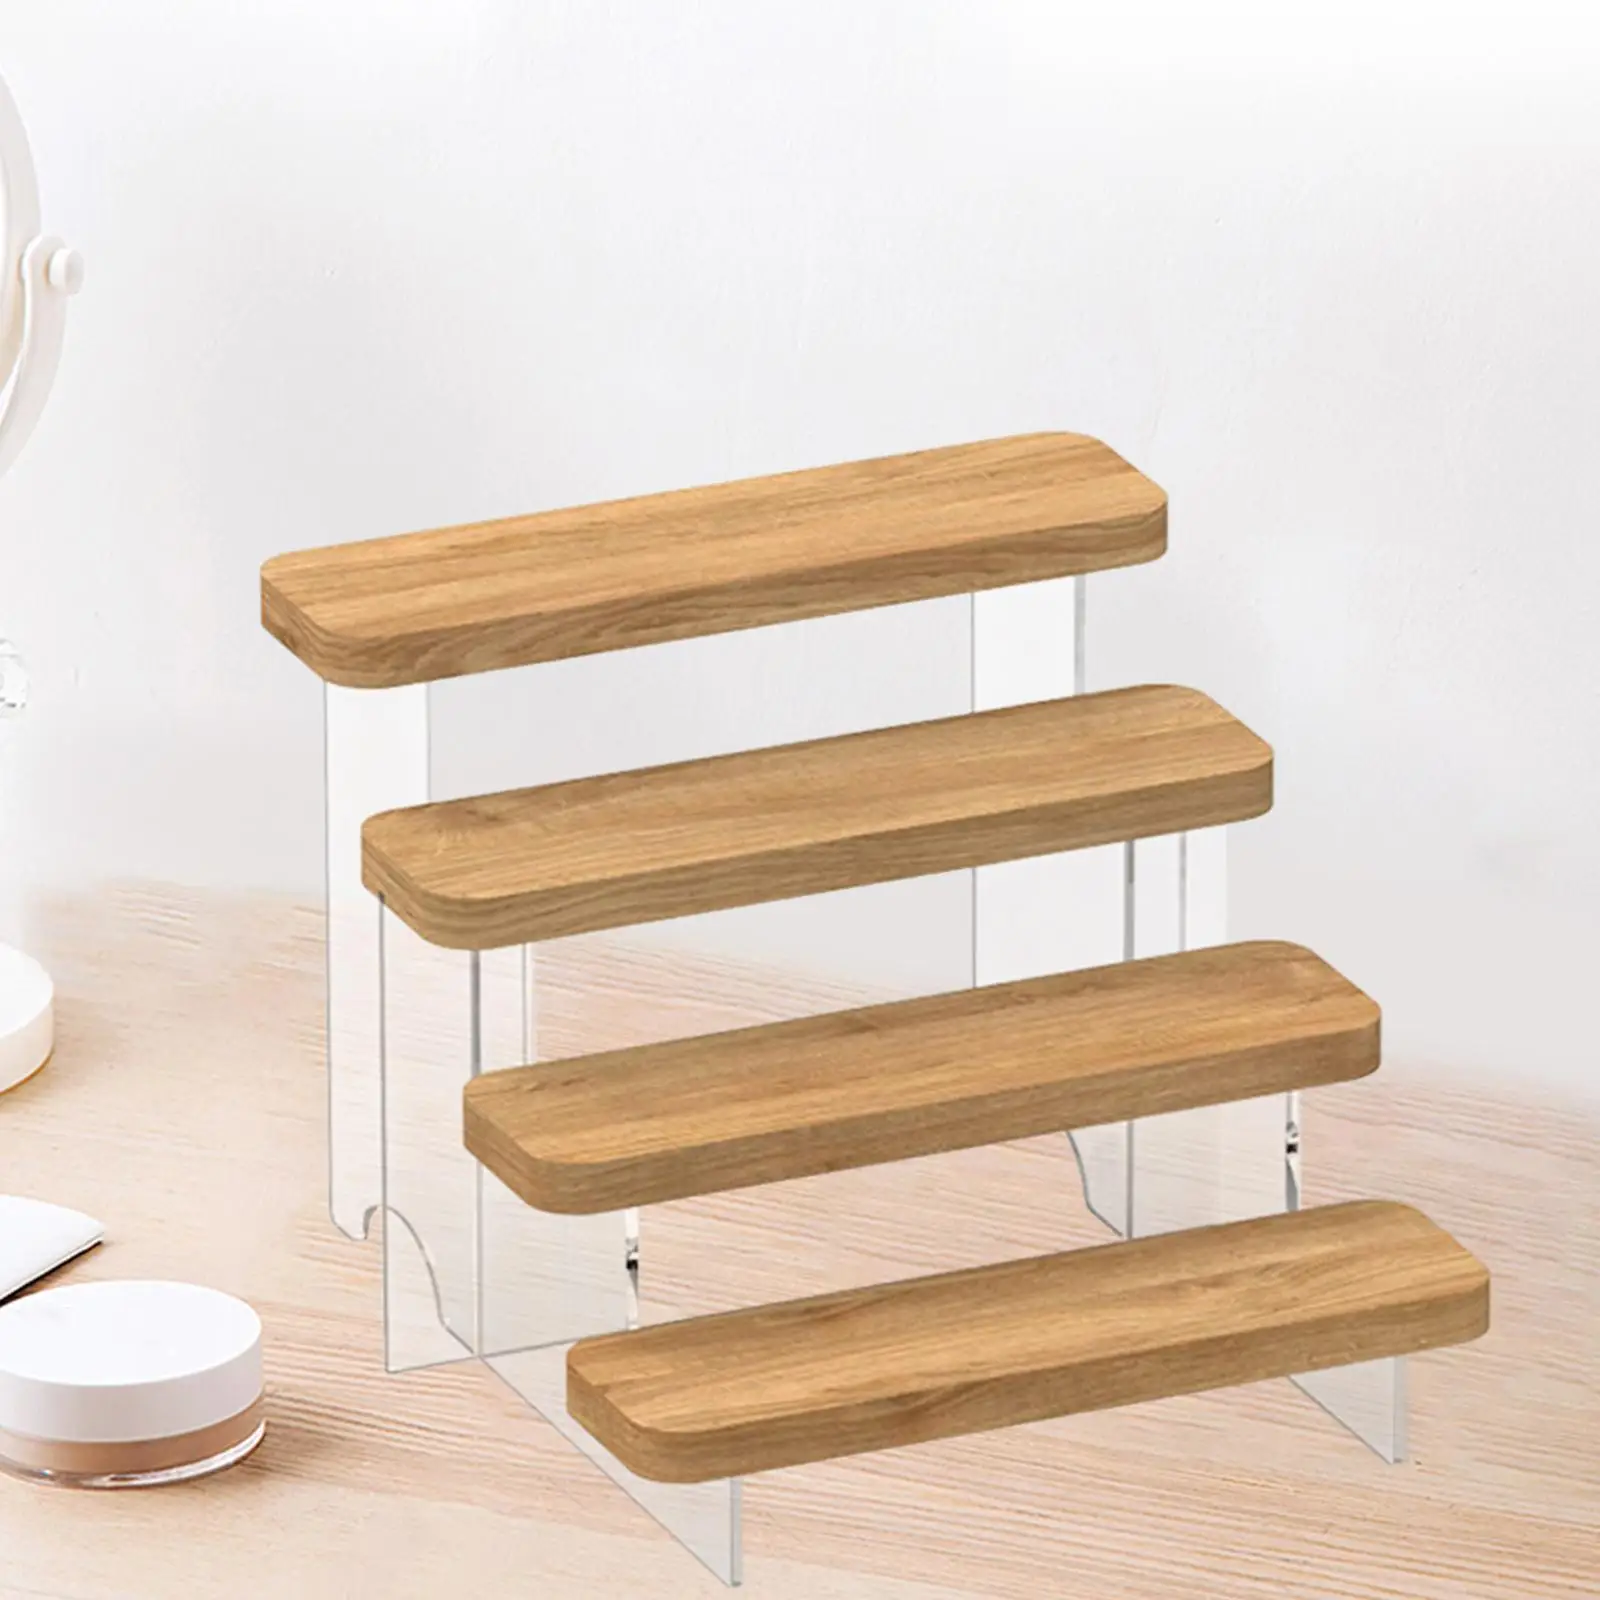 Acrylic Display Riser Shelf Showcase Fixtures Wood Shelf Display Shelves for Dessert